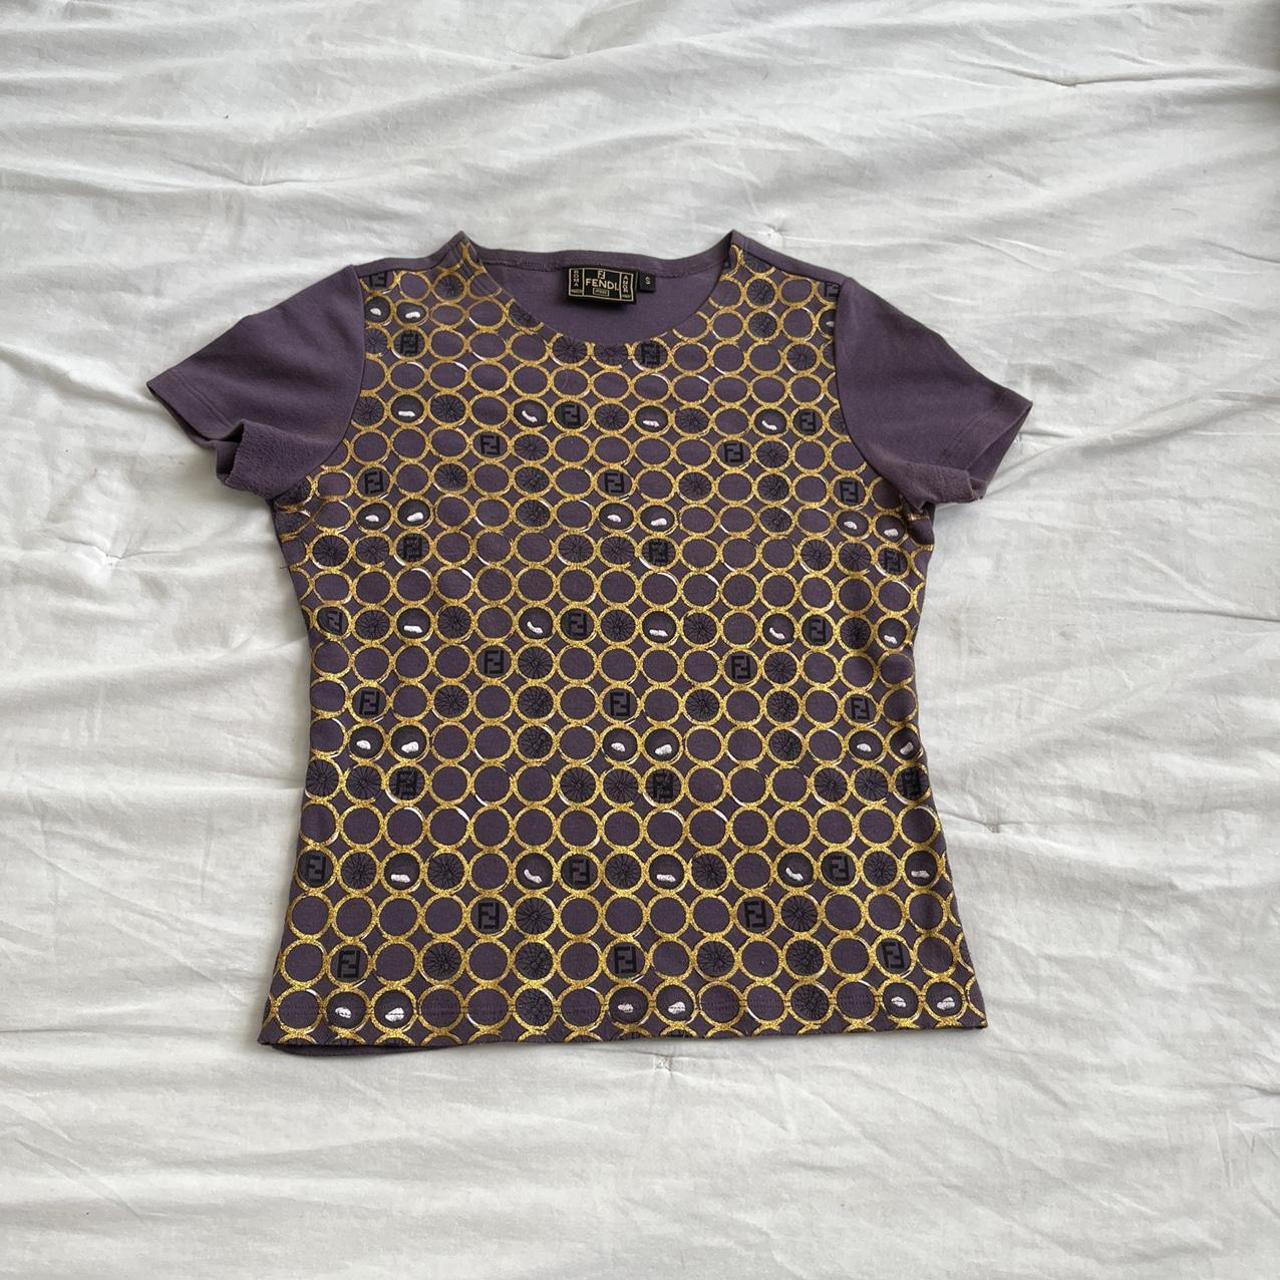 Fendi Women's Purple and Gold T-shirt